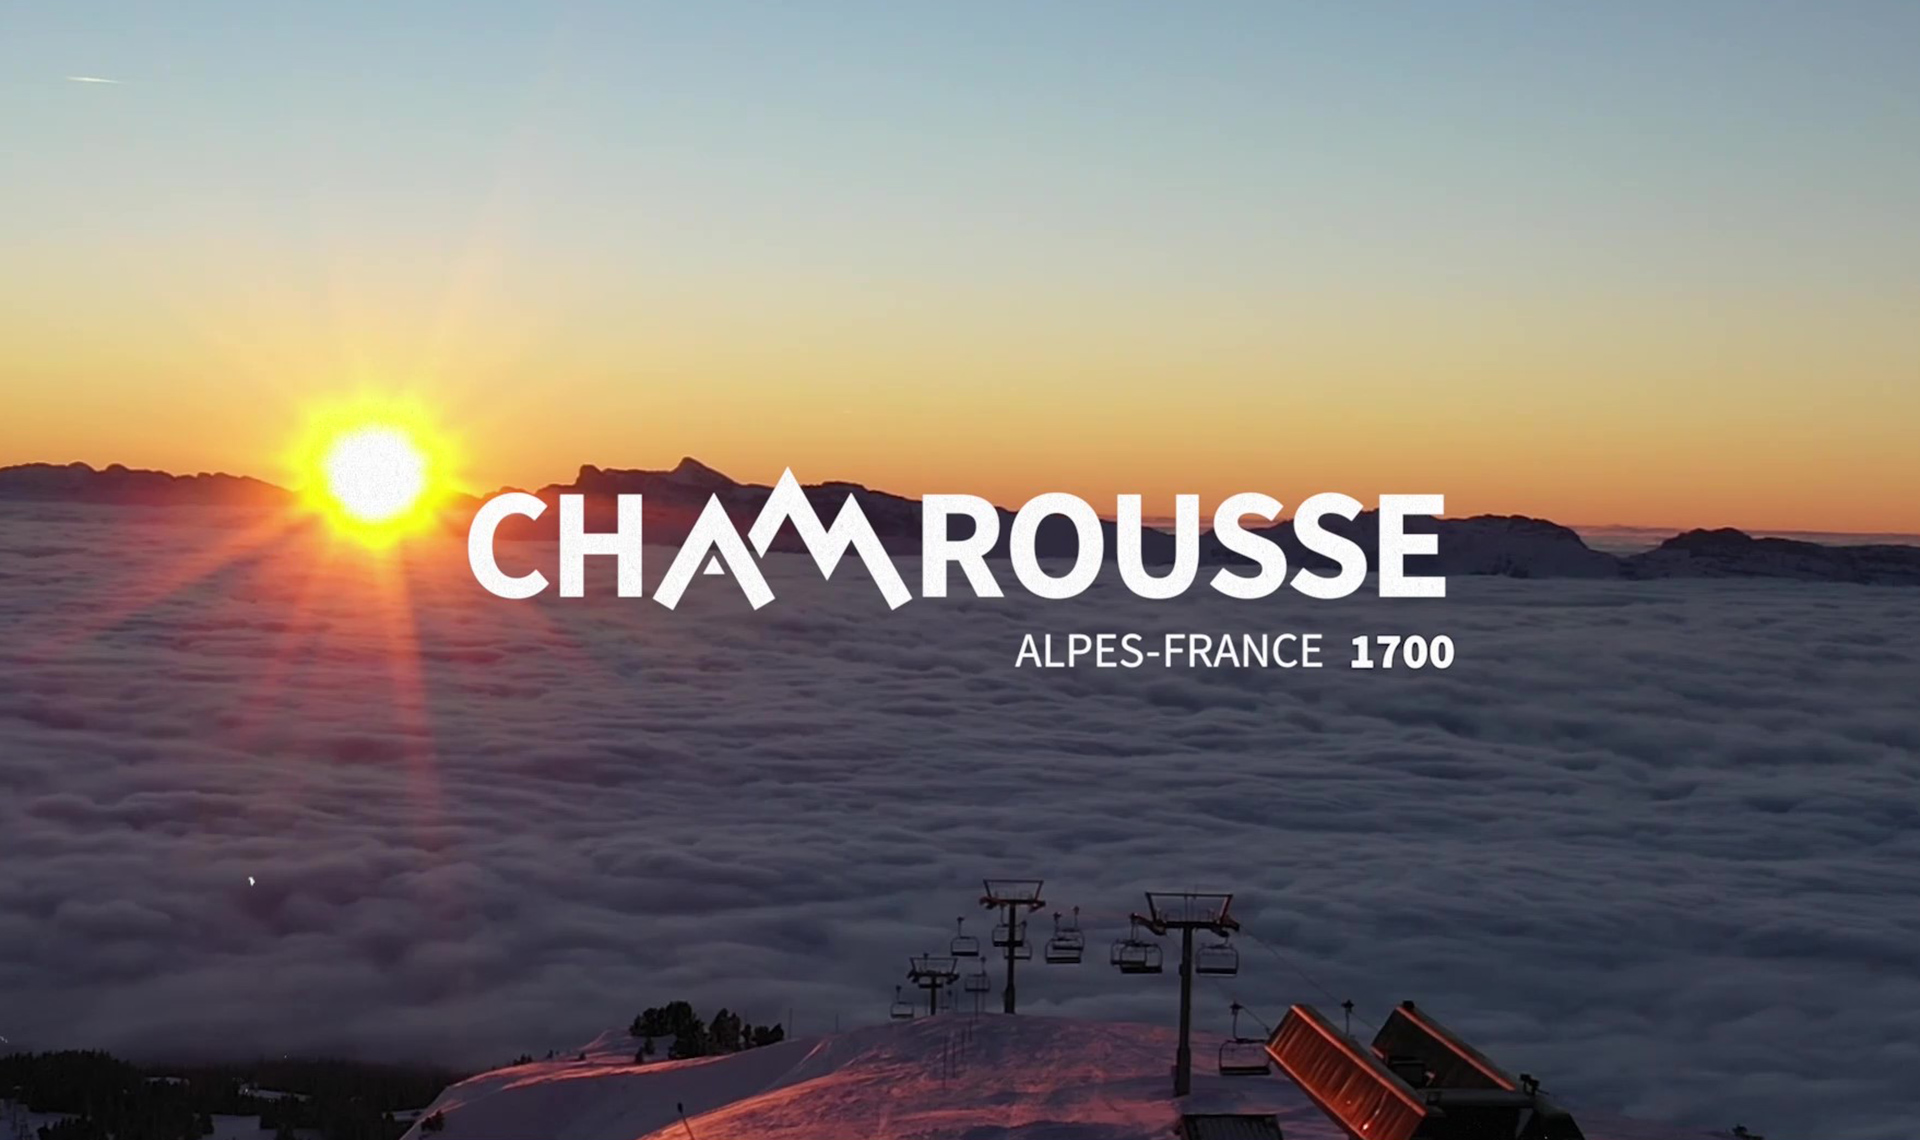 Chamrousse booking holidays winter sunset rental flat chalet activity ski resort mountain grenoble isere lyon french alps france - © Klip.fr